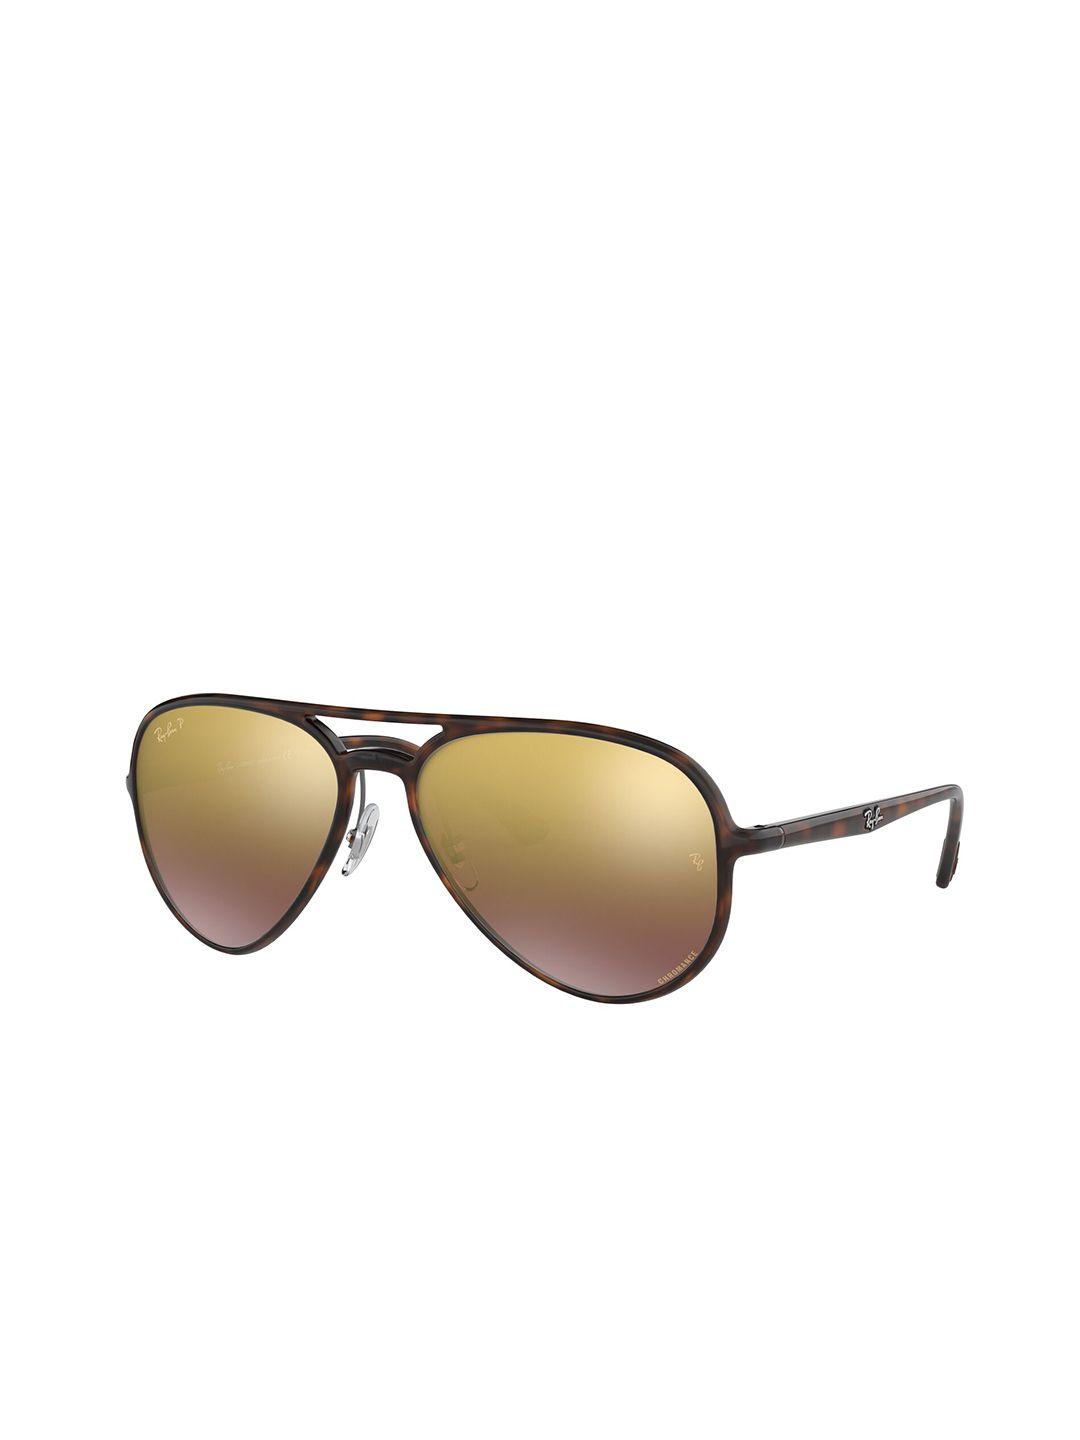 ray-ban aviator sunglasses with polarised lens 8056597017398